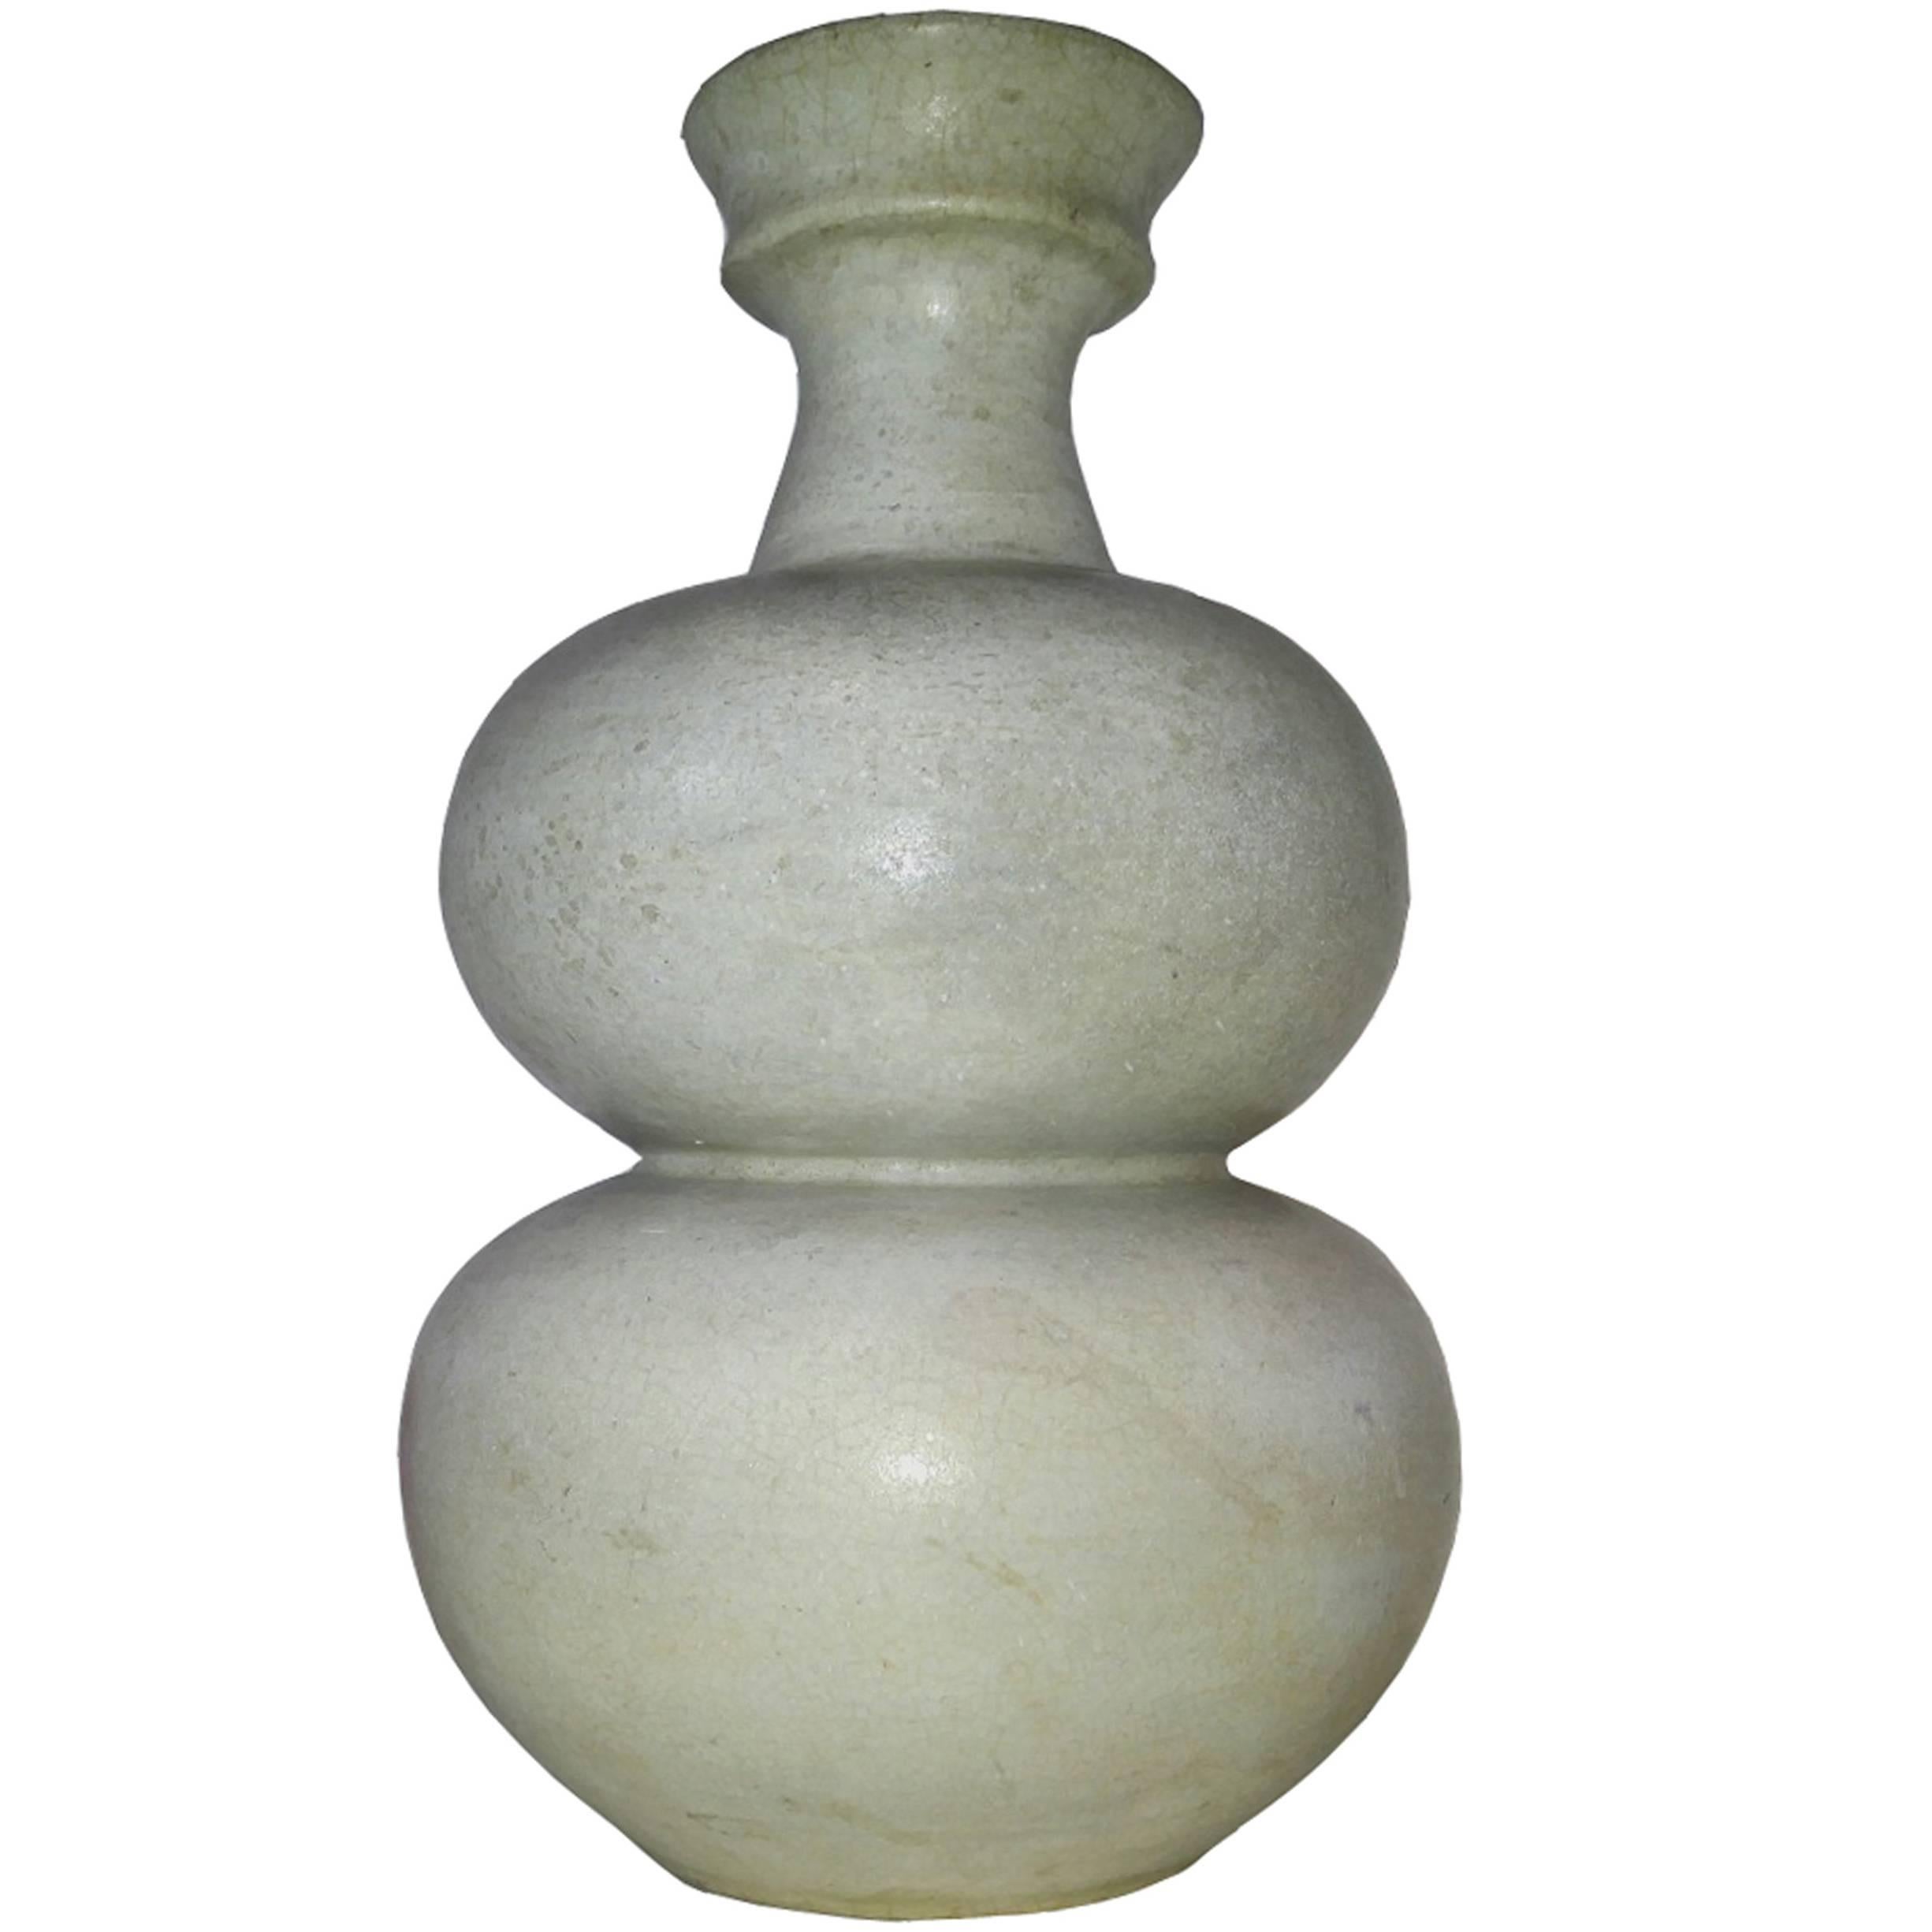 Ceramic Vase with White Glaze